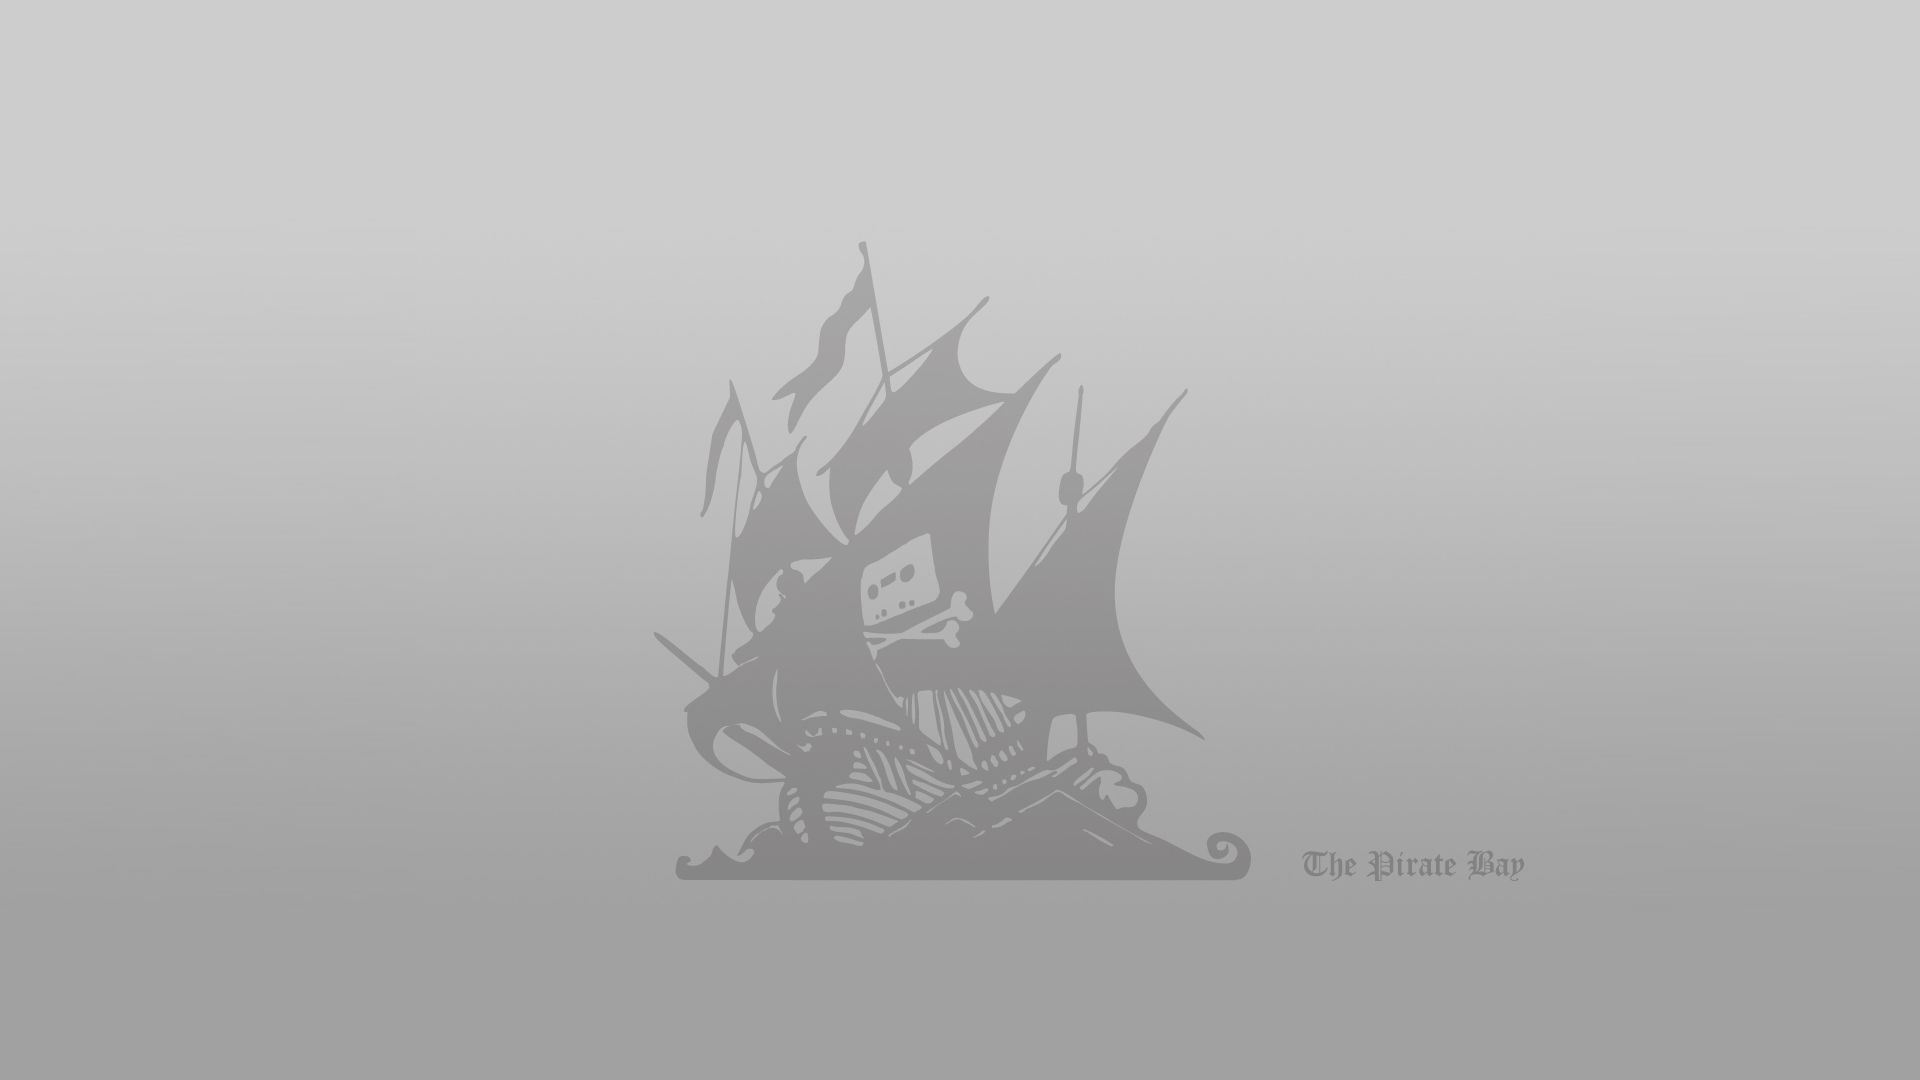 the pirate bay, technology, logo, ship